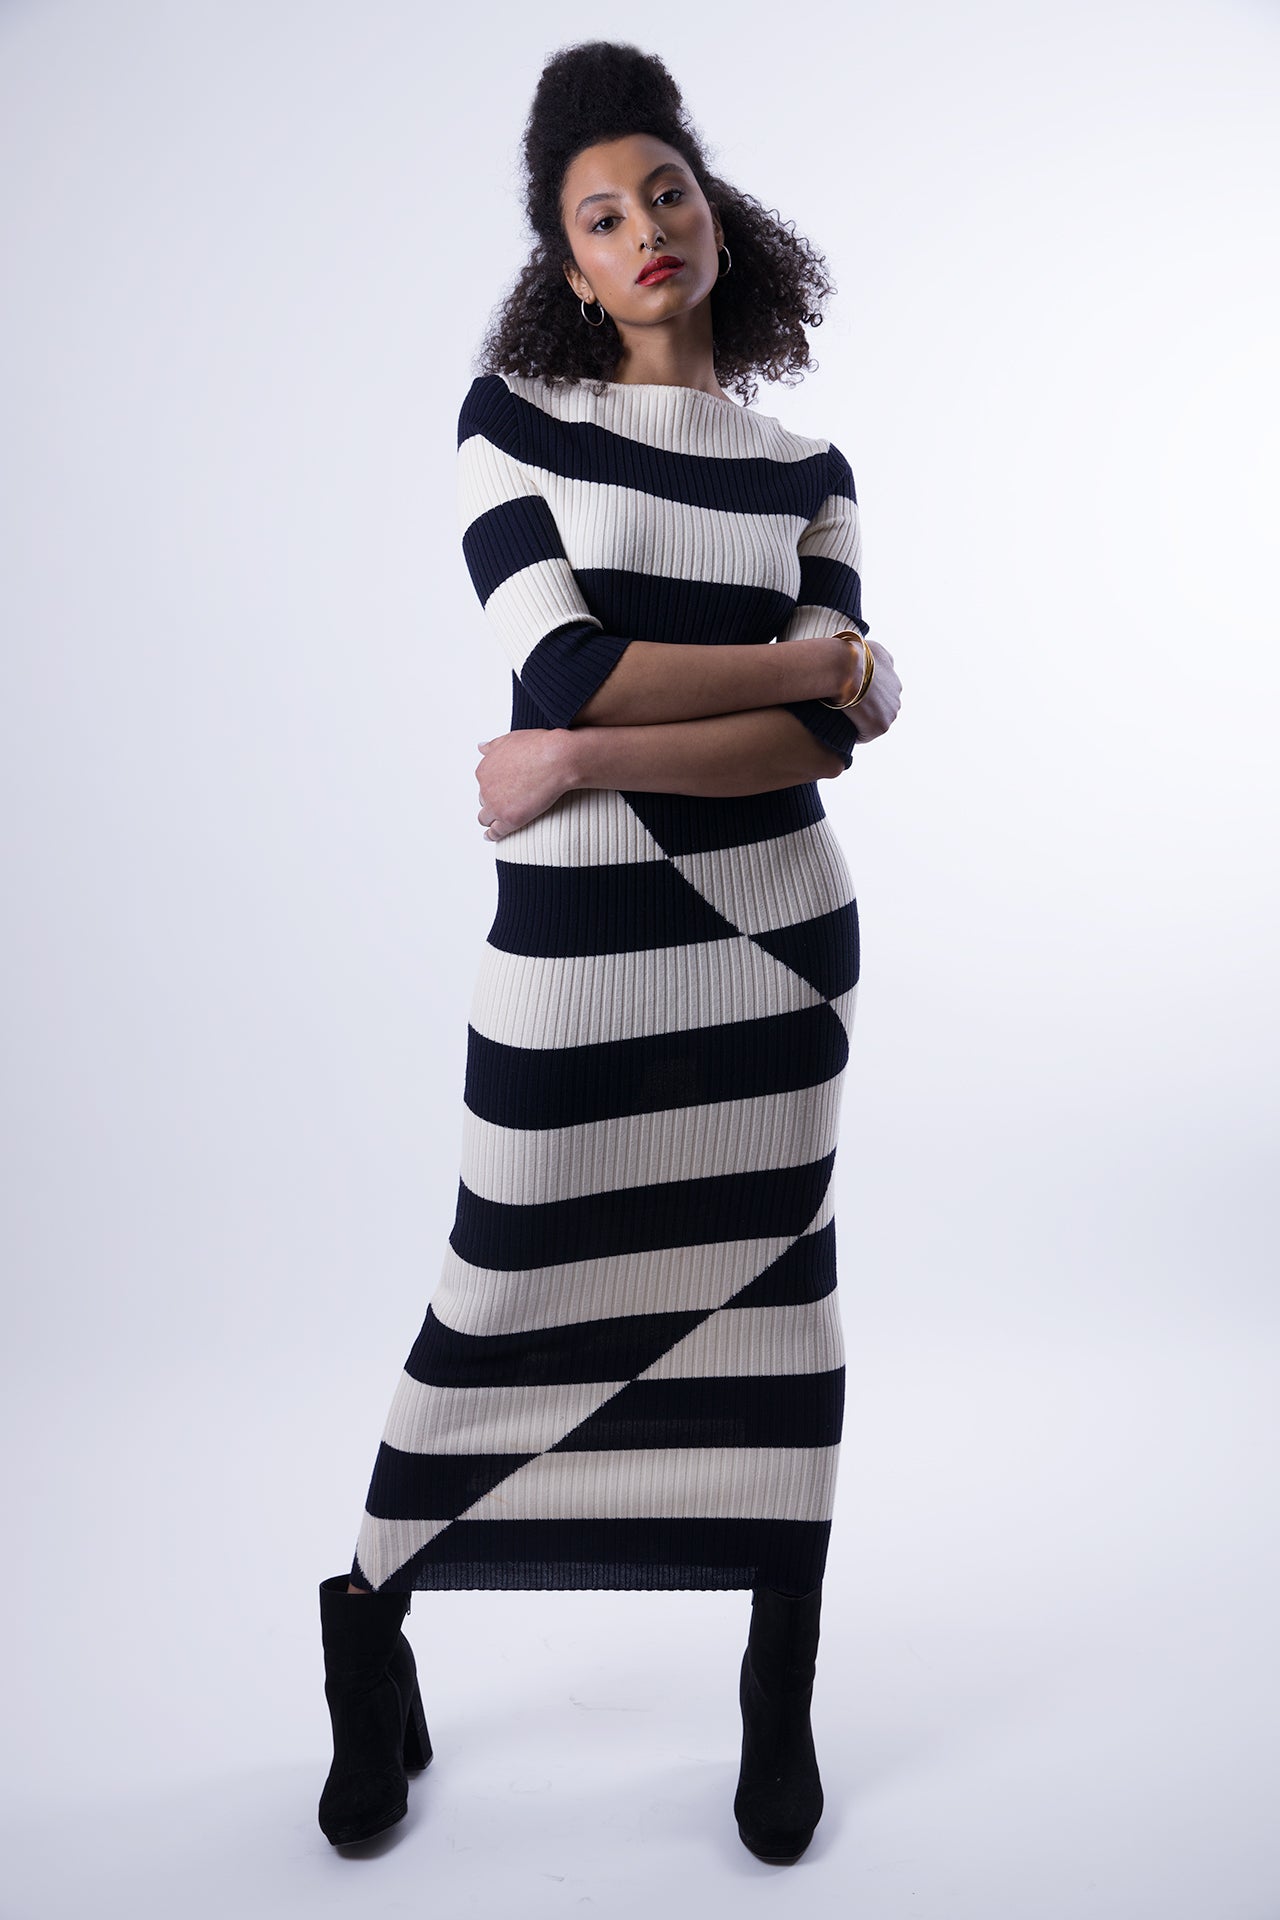 Solid & Striped Kelly Dress in Multi Stripe | REVOLVE